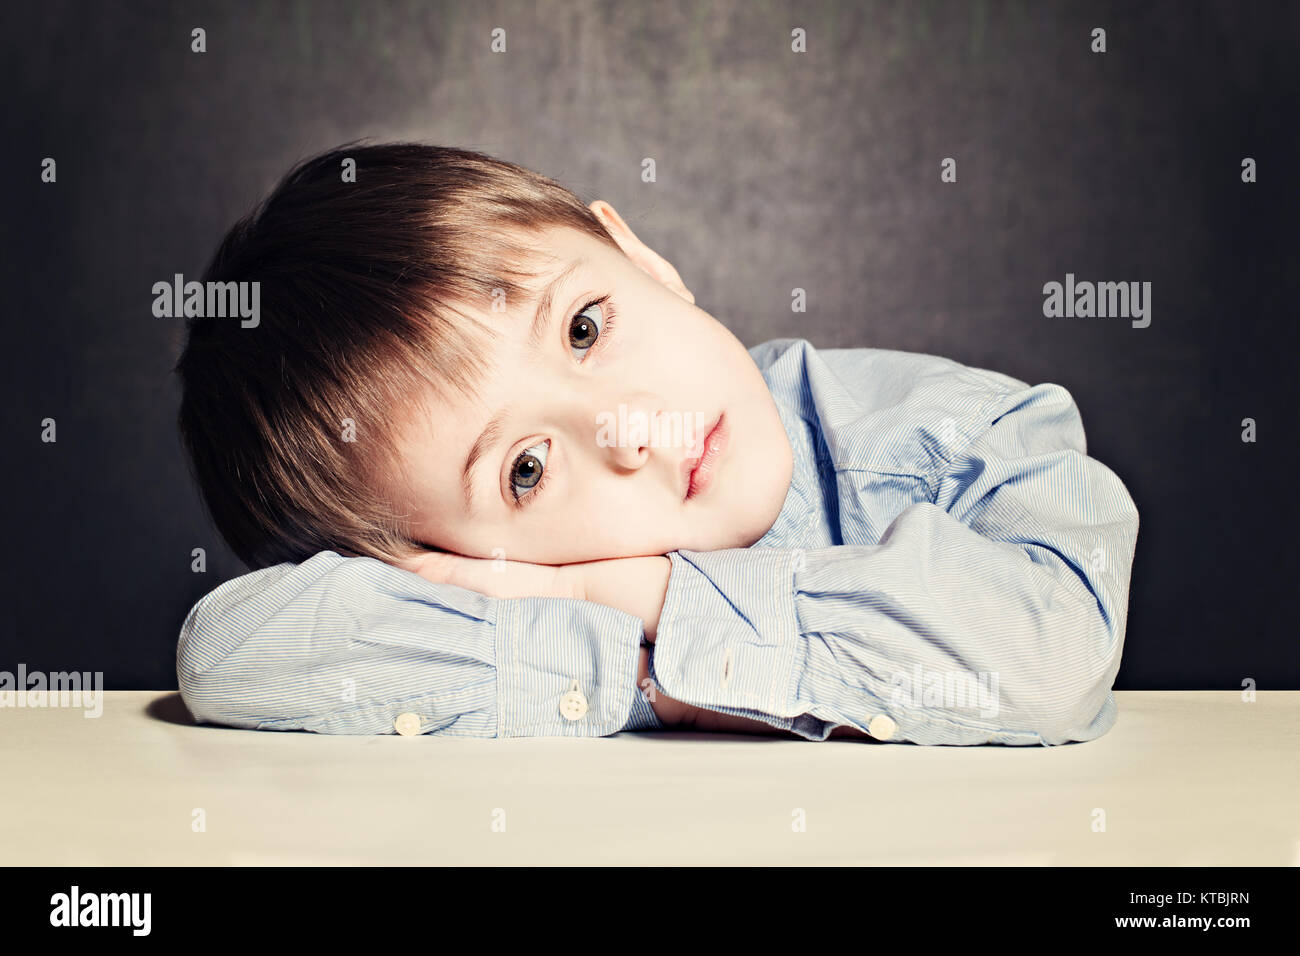 Sad Child Boy. Little Kid in Stress Stock Photo